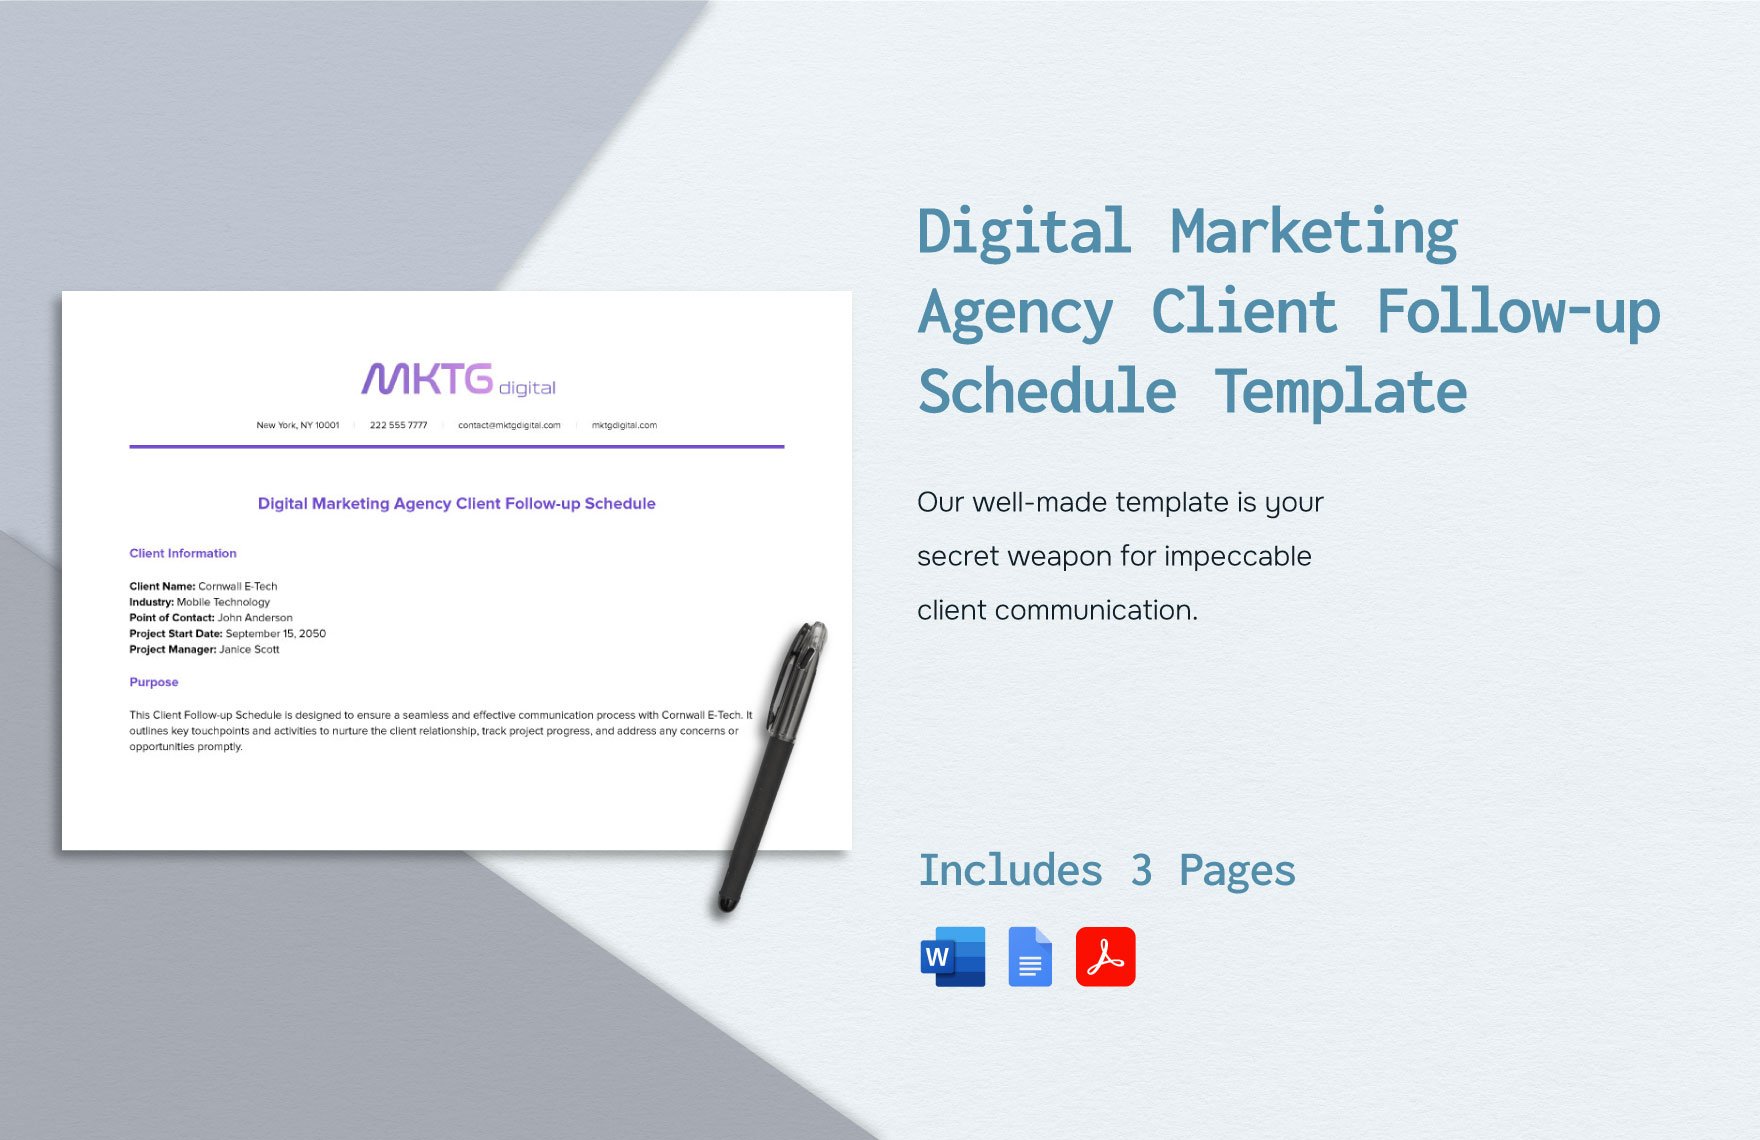 Digital Marketing Agency Client Follow-up Schedule Template